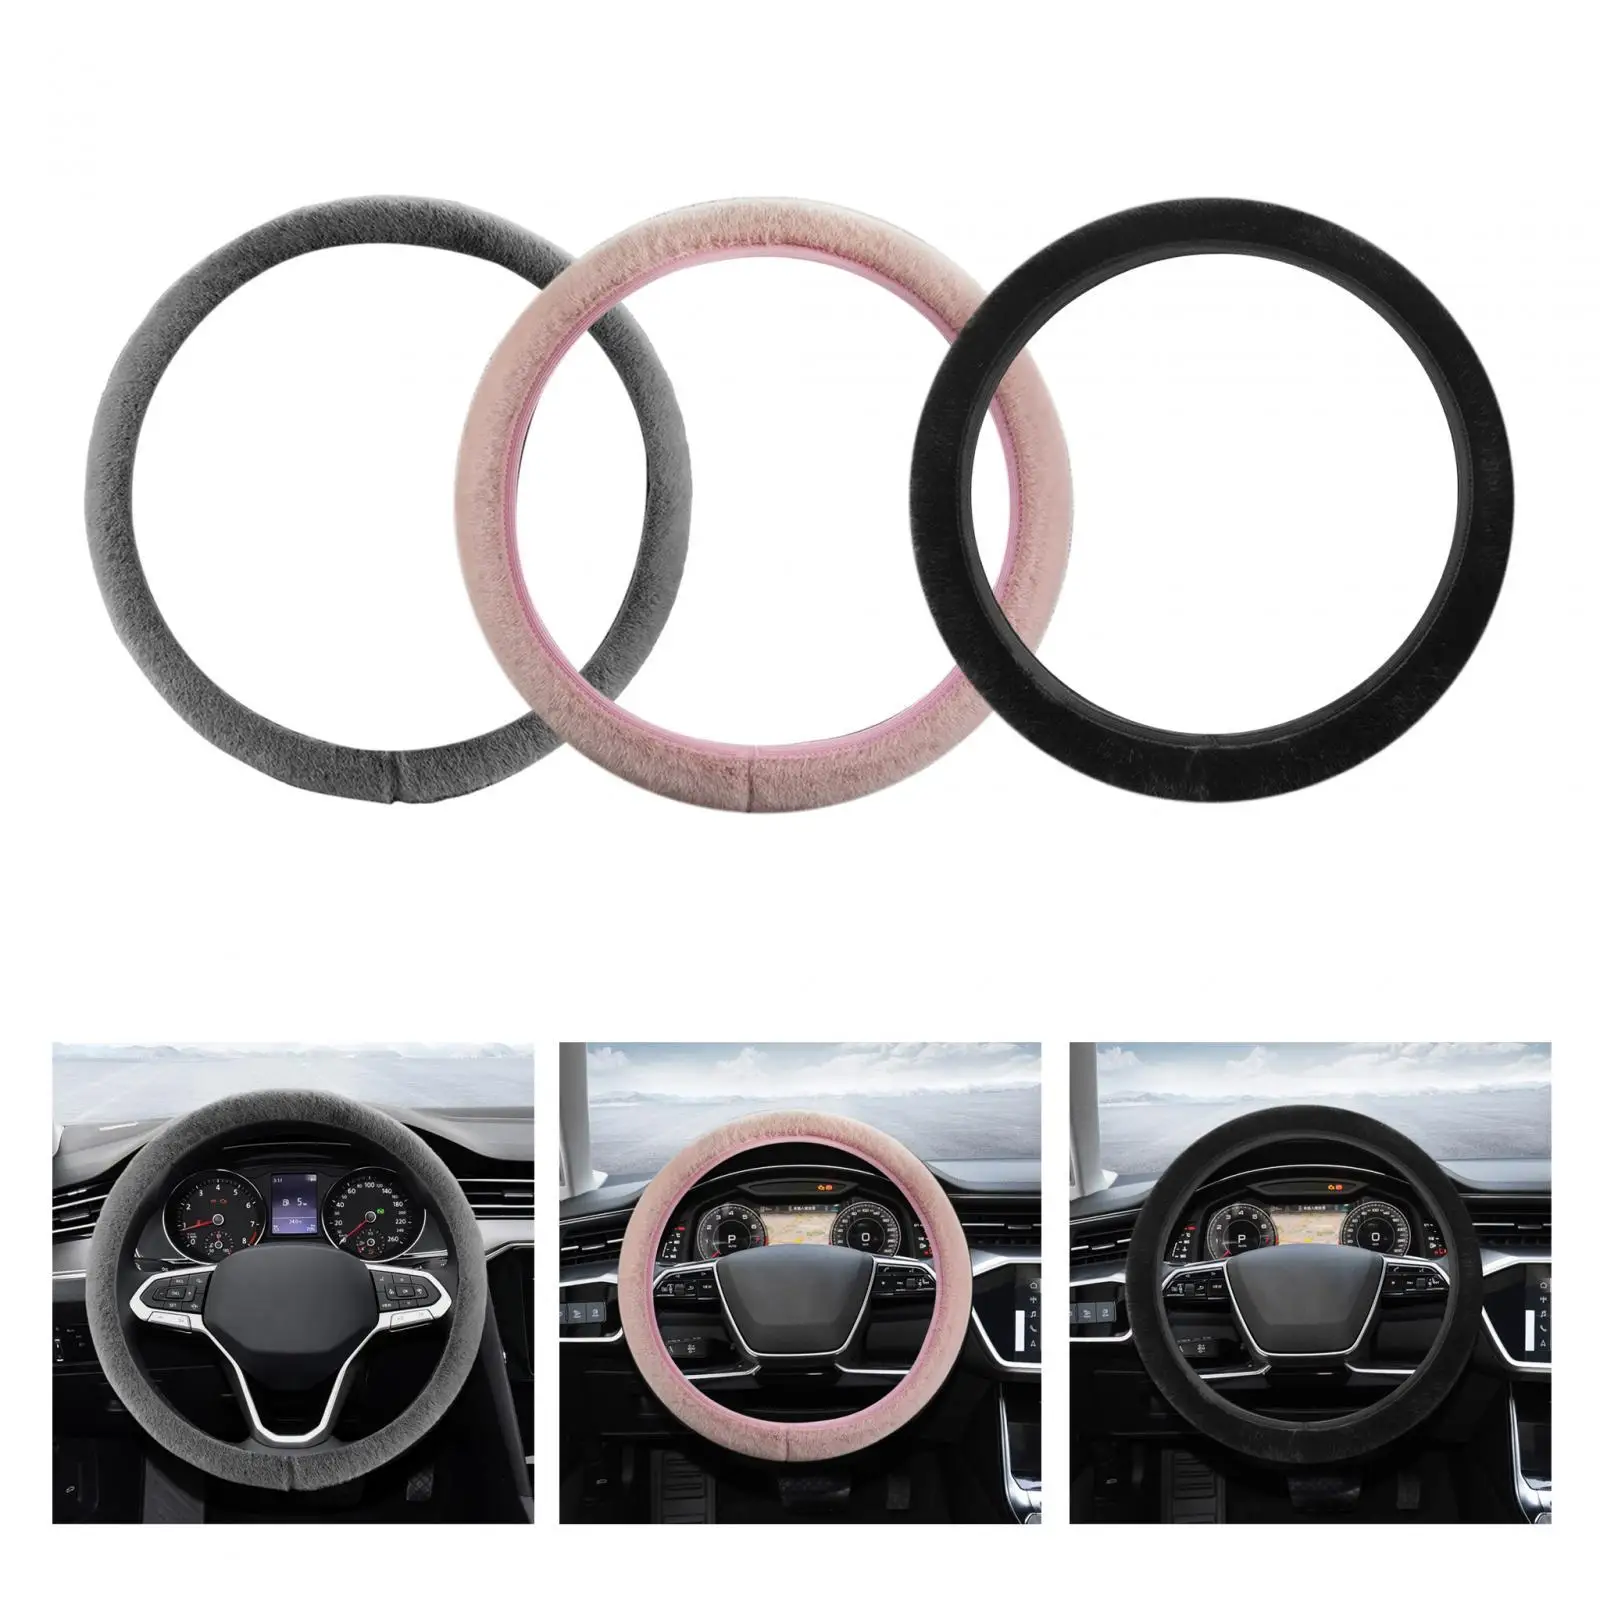 38cm Soft Plush Car Steering Wheel Cover Breathable Stylish Easily Install Sturdy Car Interior Modification Anti Slip Accessory